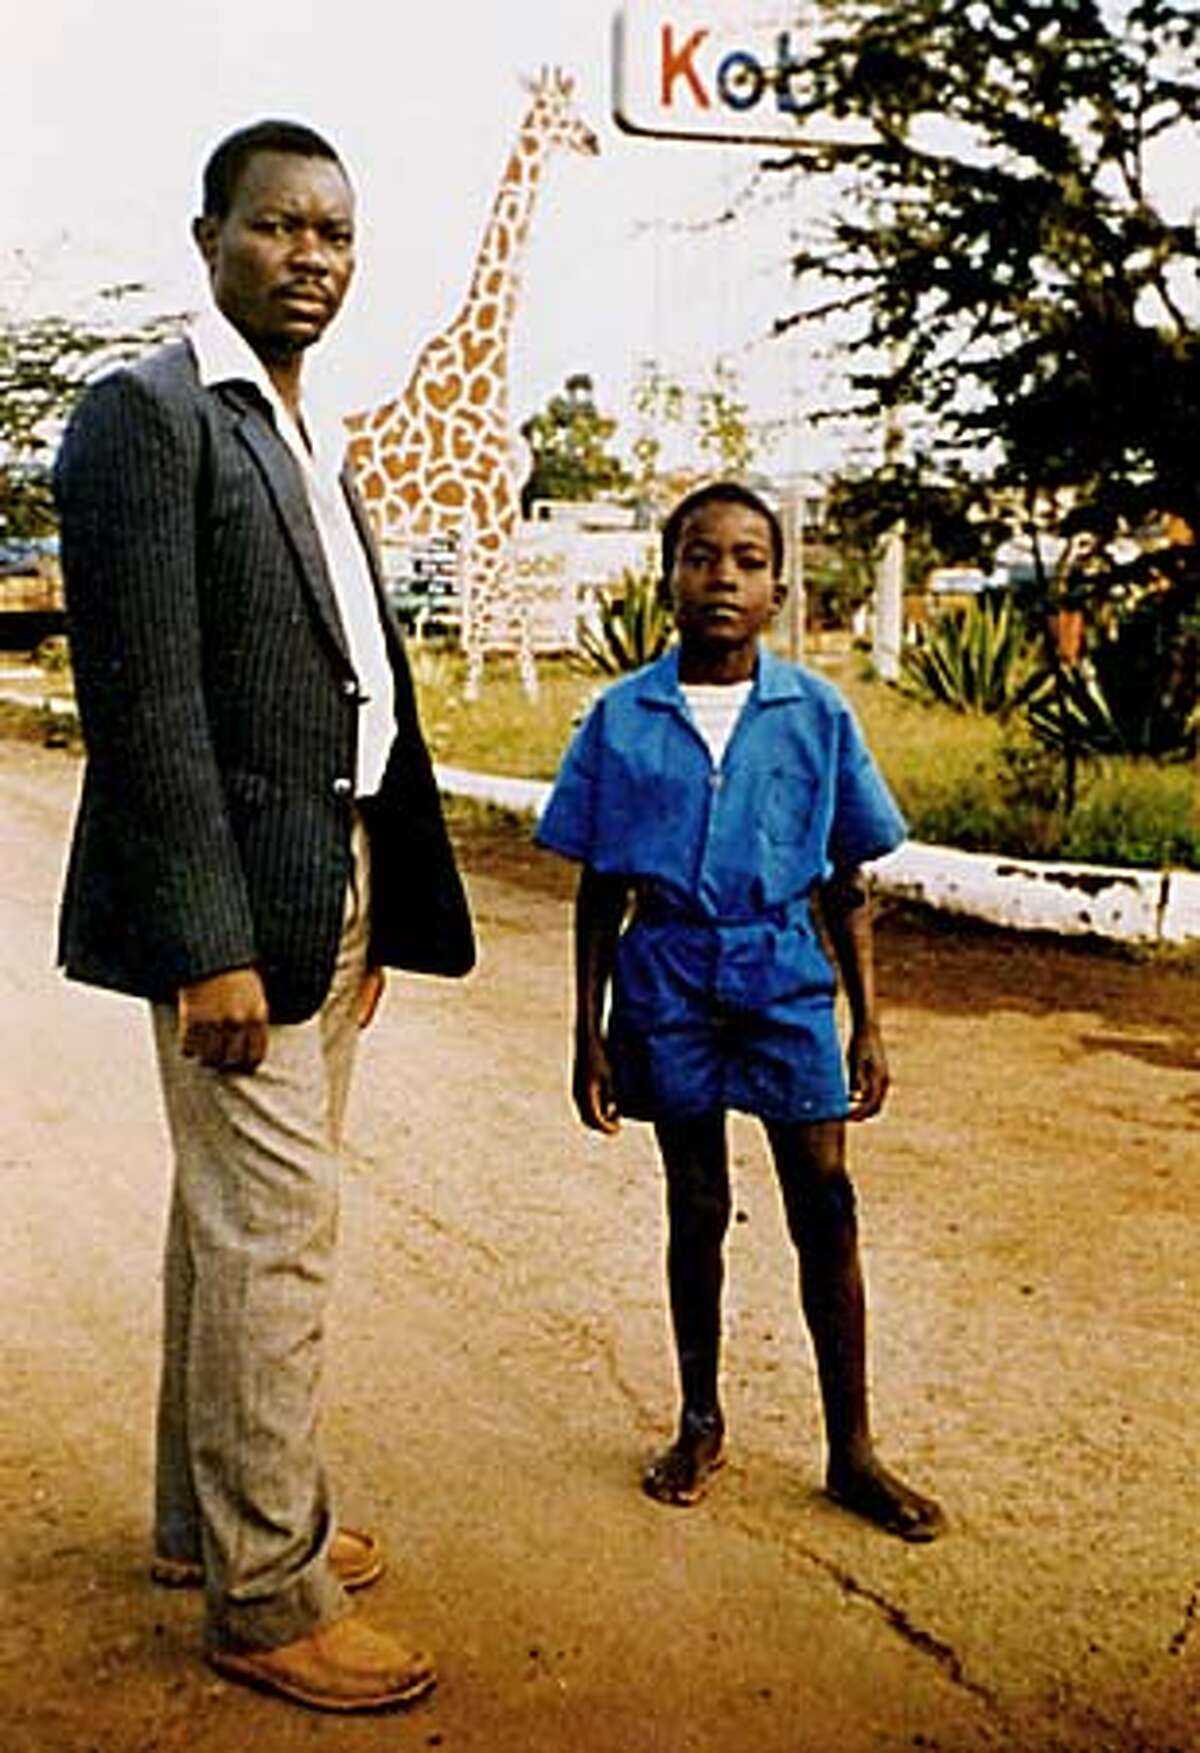 At age 10, Masai student Kimeli Naiyomah posed with his Kenyan primary school teacher S. Nyangeri.